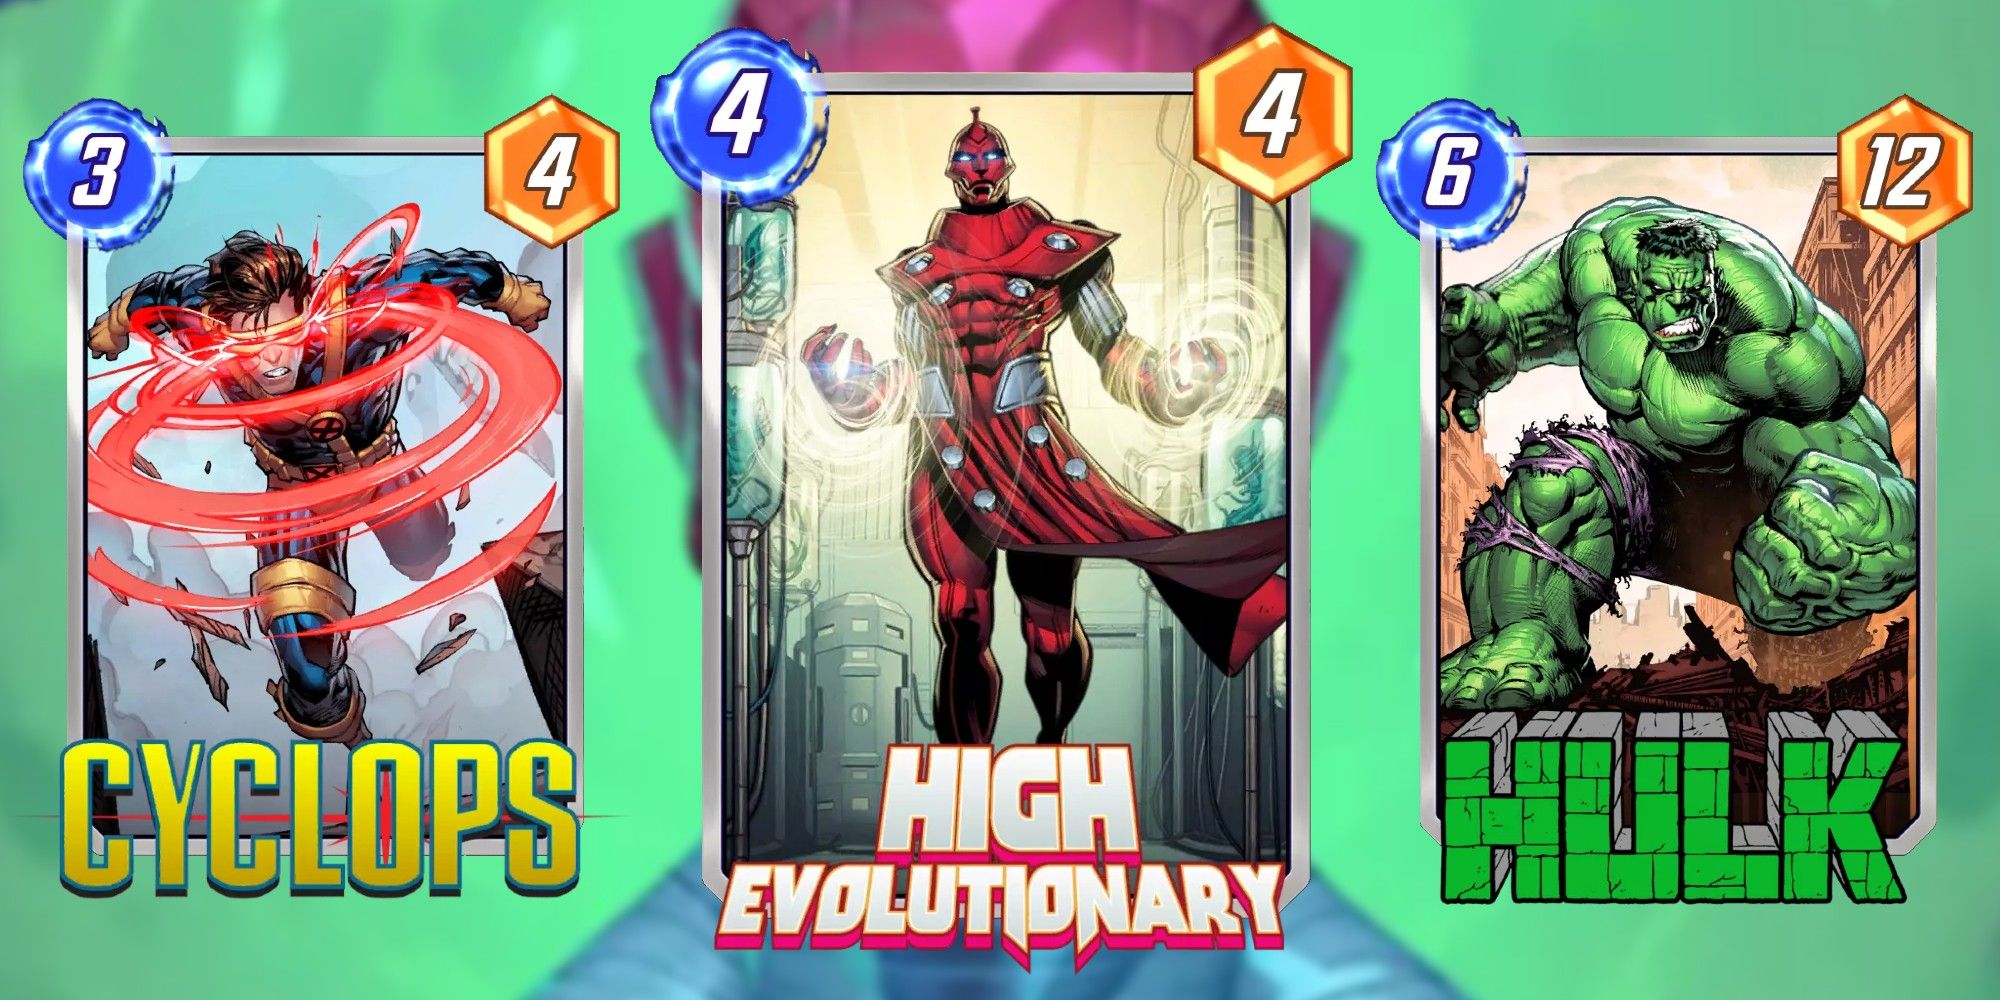 High Evolutionary - Marvel Snap Cards